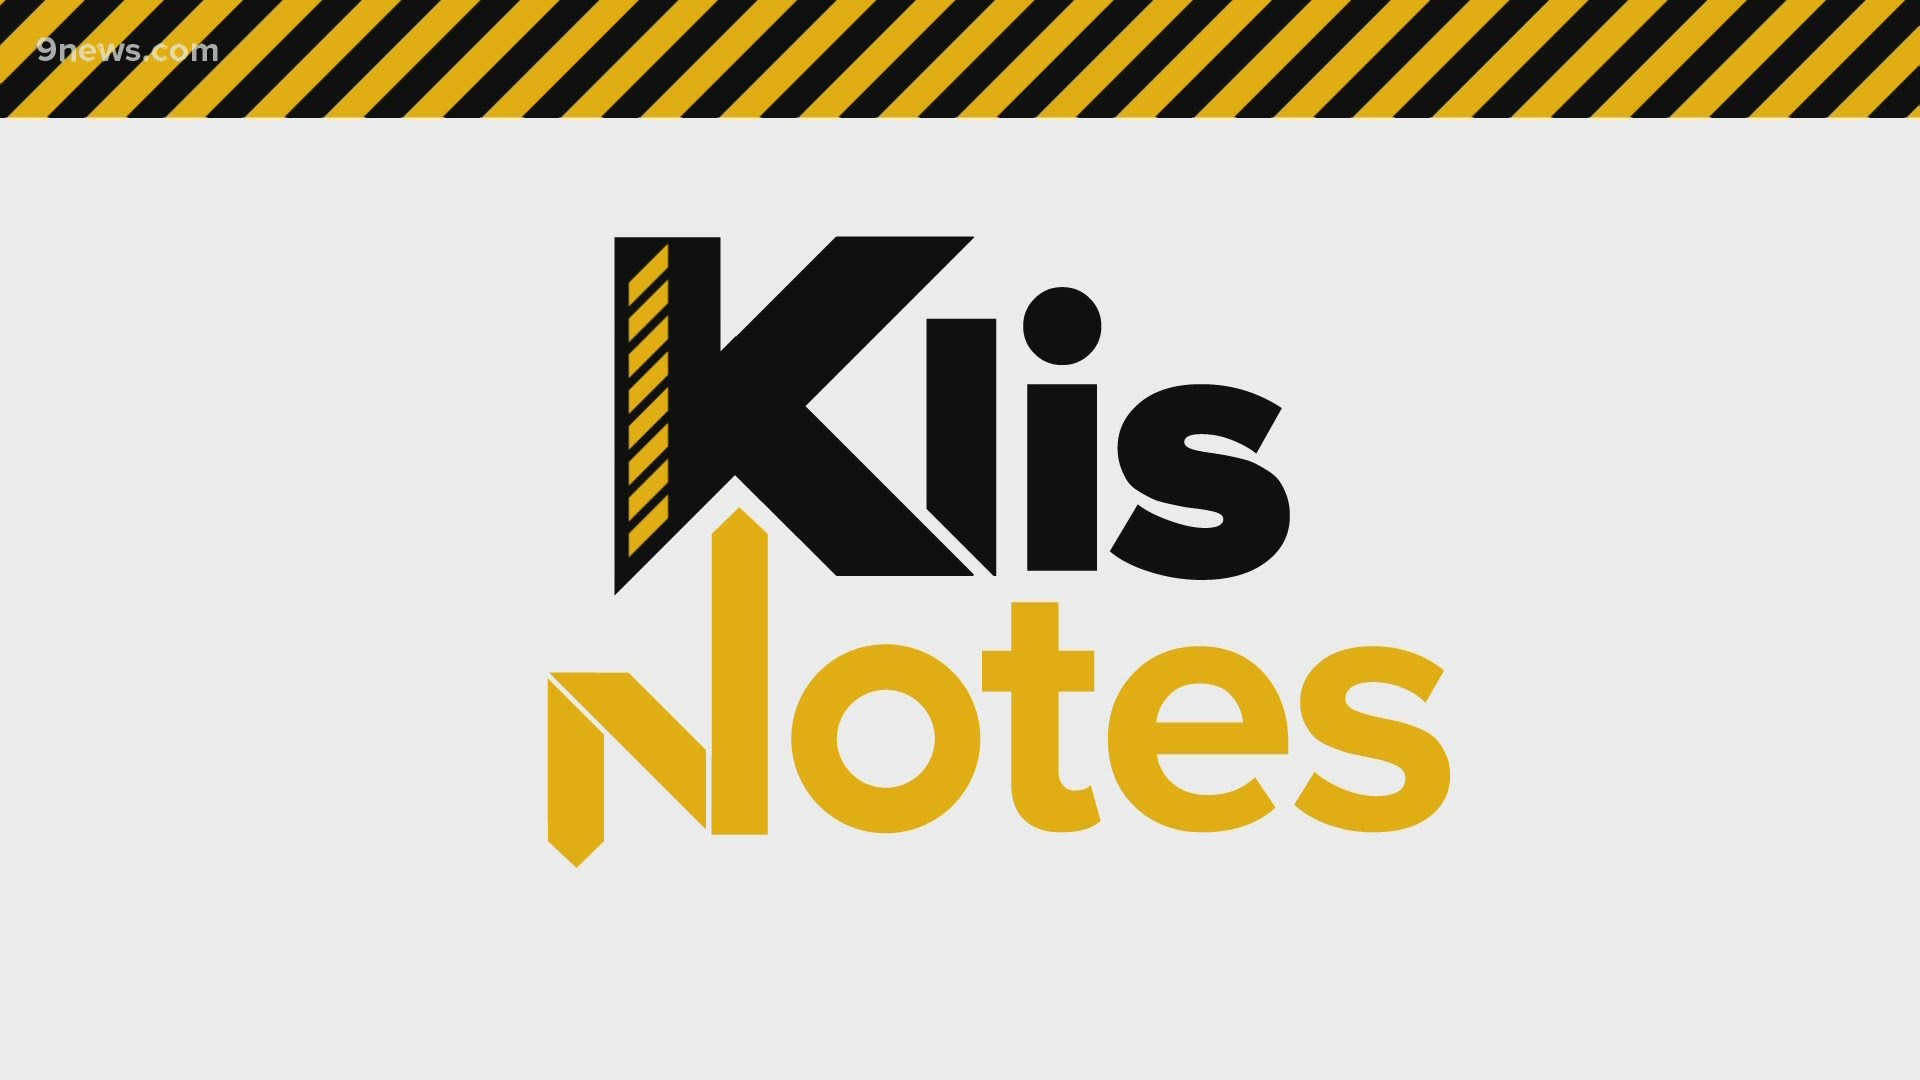 9NEWS insider Mike Klis breaks down 5 keys the Broncos must do to bounce back against the Steelers in Week 2.